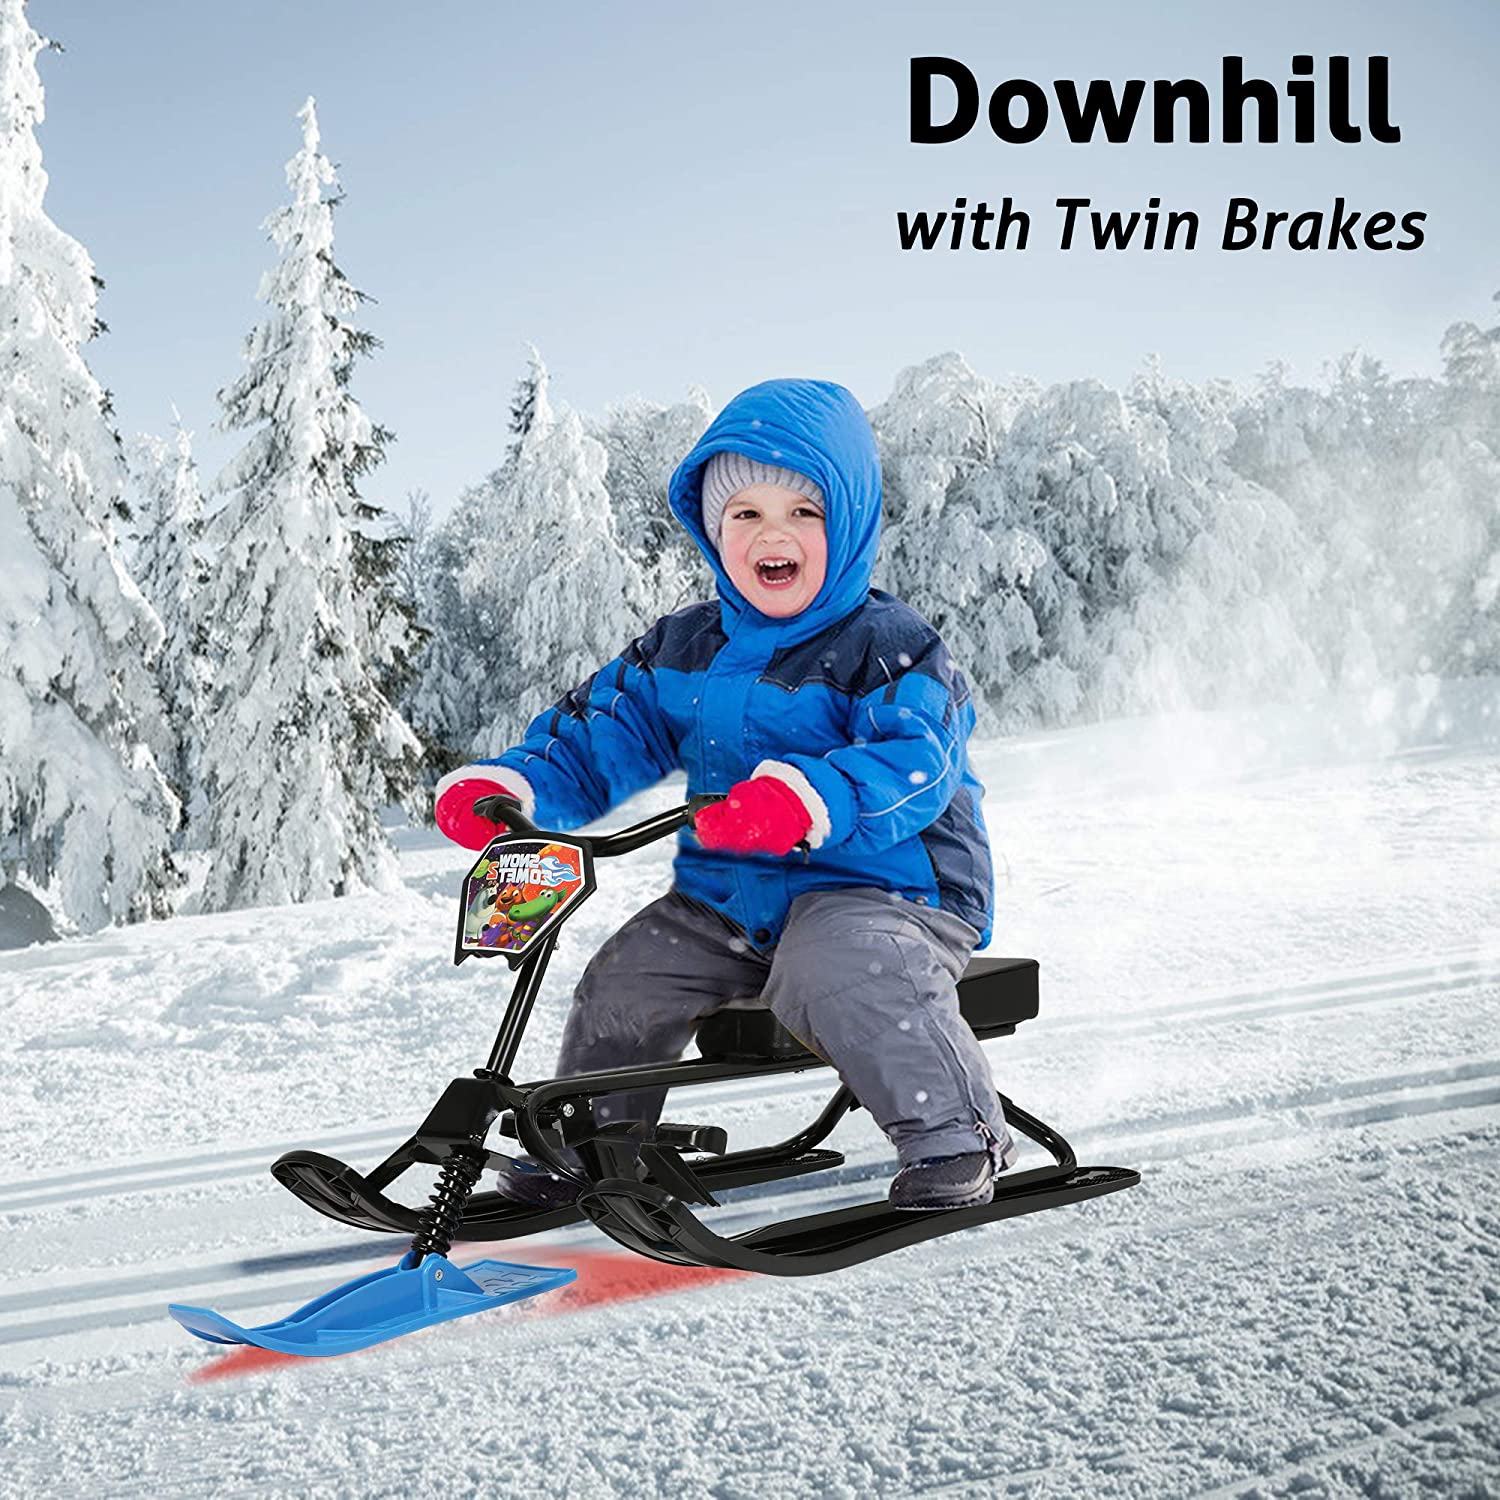 Snow Racer Sled with Steering Wheel and Brakes Kids Teens Ski Sled Slider Board, Blue